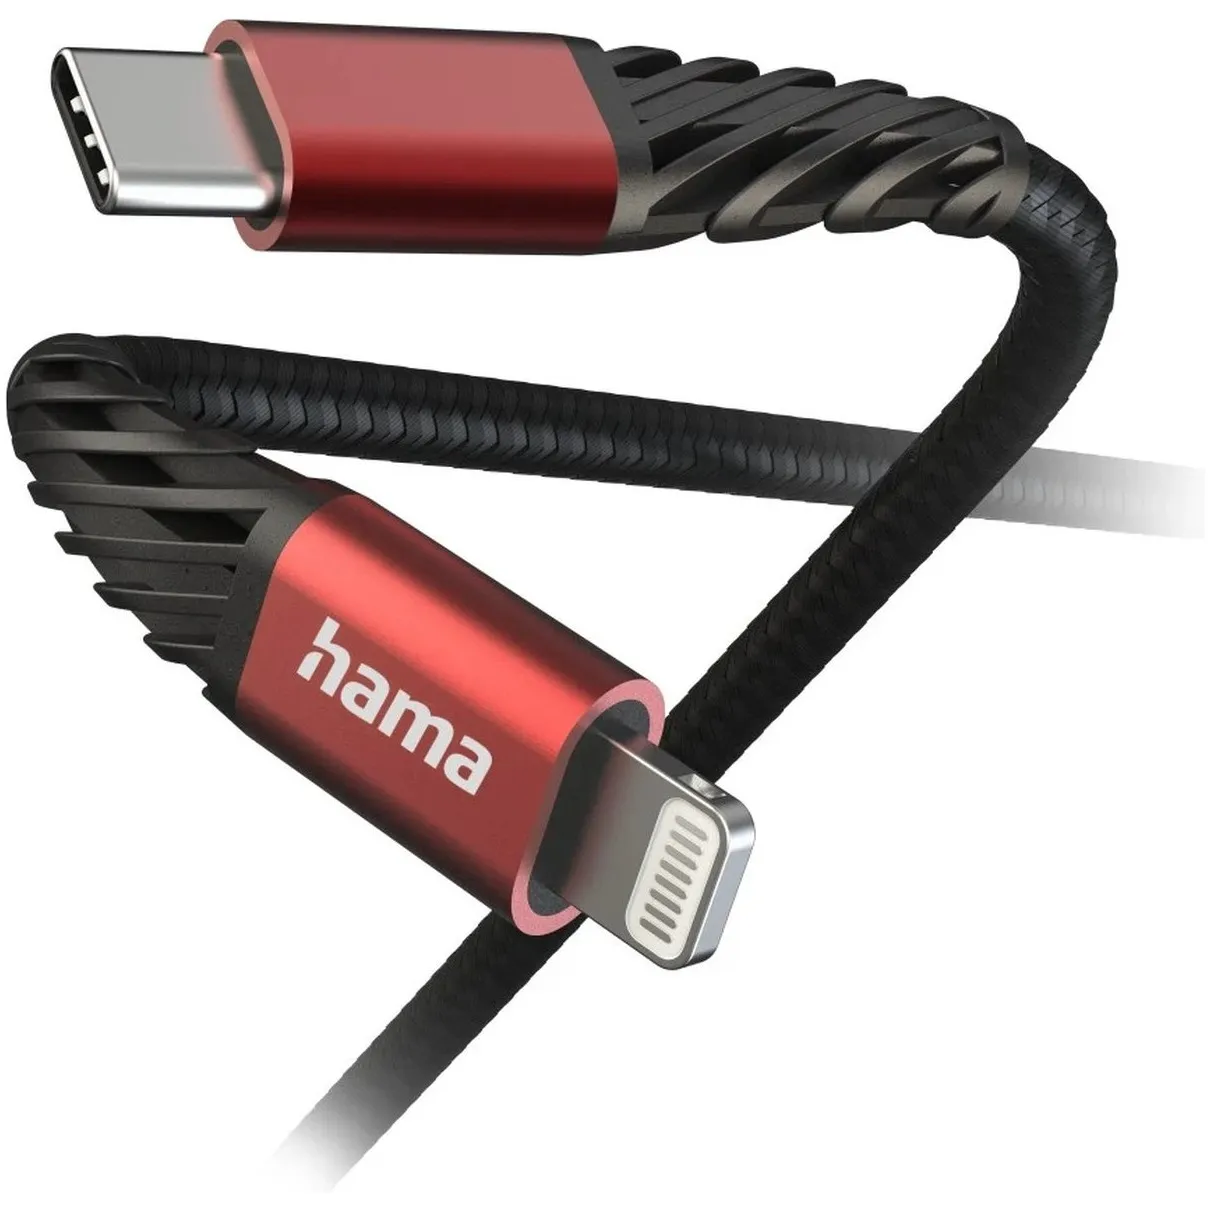 Hama Oplaad-/gegevenskabel Extreme, USB-C - Lightning, 1,5 m Zwart/rood